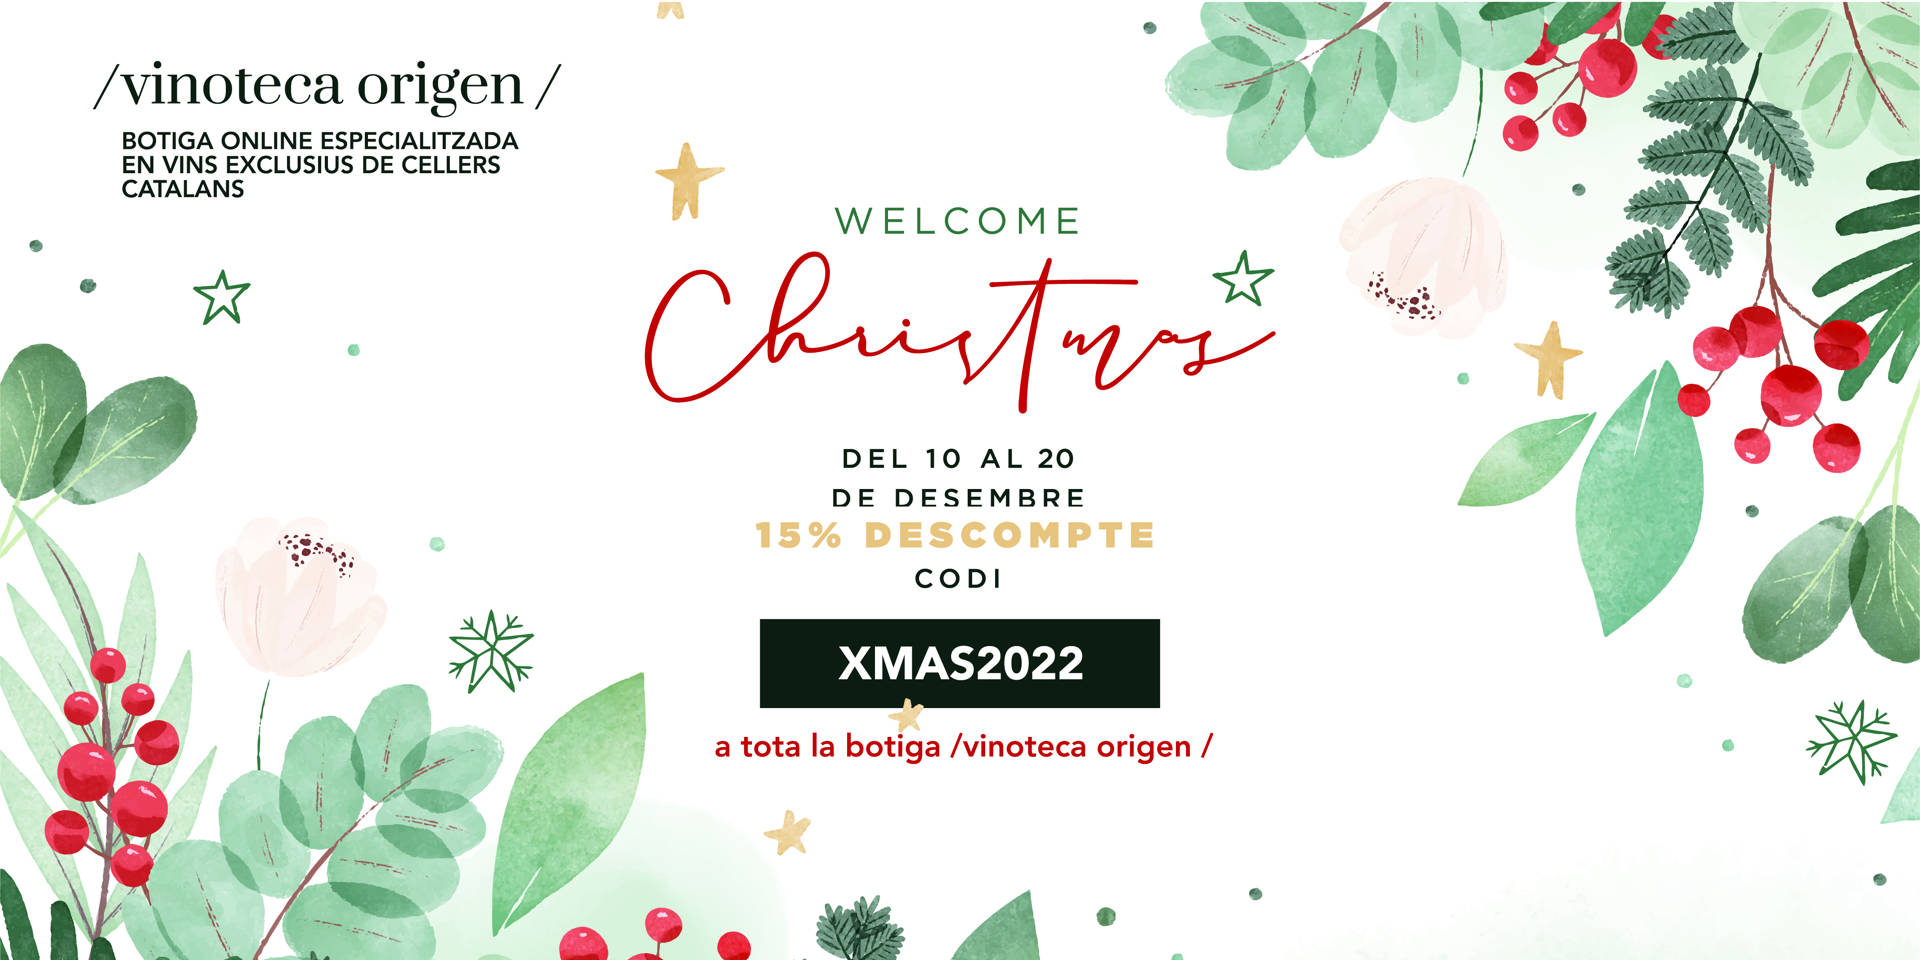 WELCOME Christmas DEL 10 AL 20 DE DESEMBRE 15% DE DESCOMPTE a tota la botiga online Vinoteca Origen CODI XMAS2022